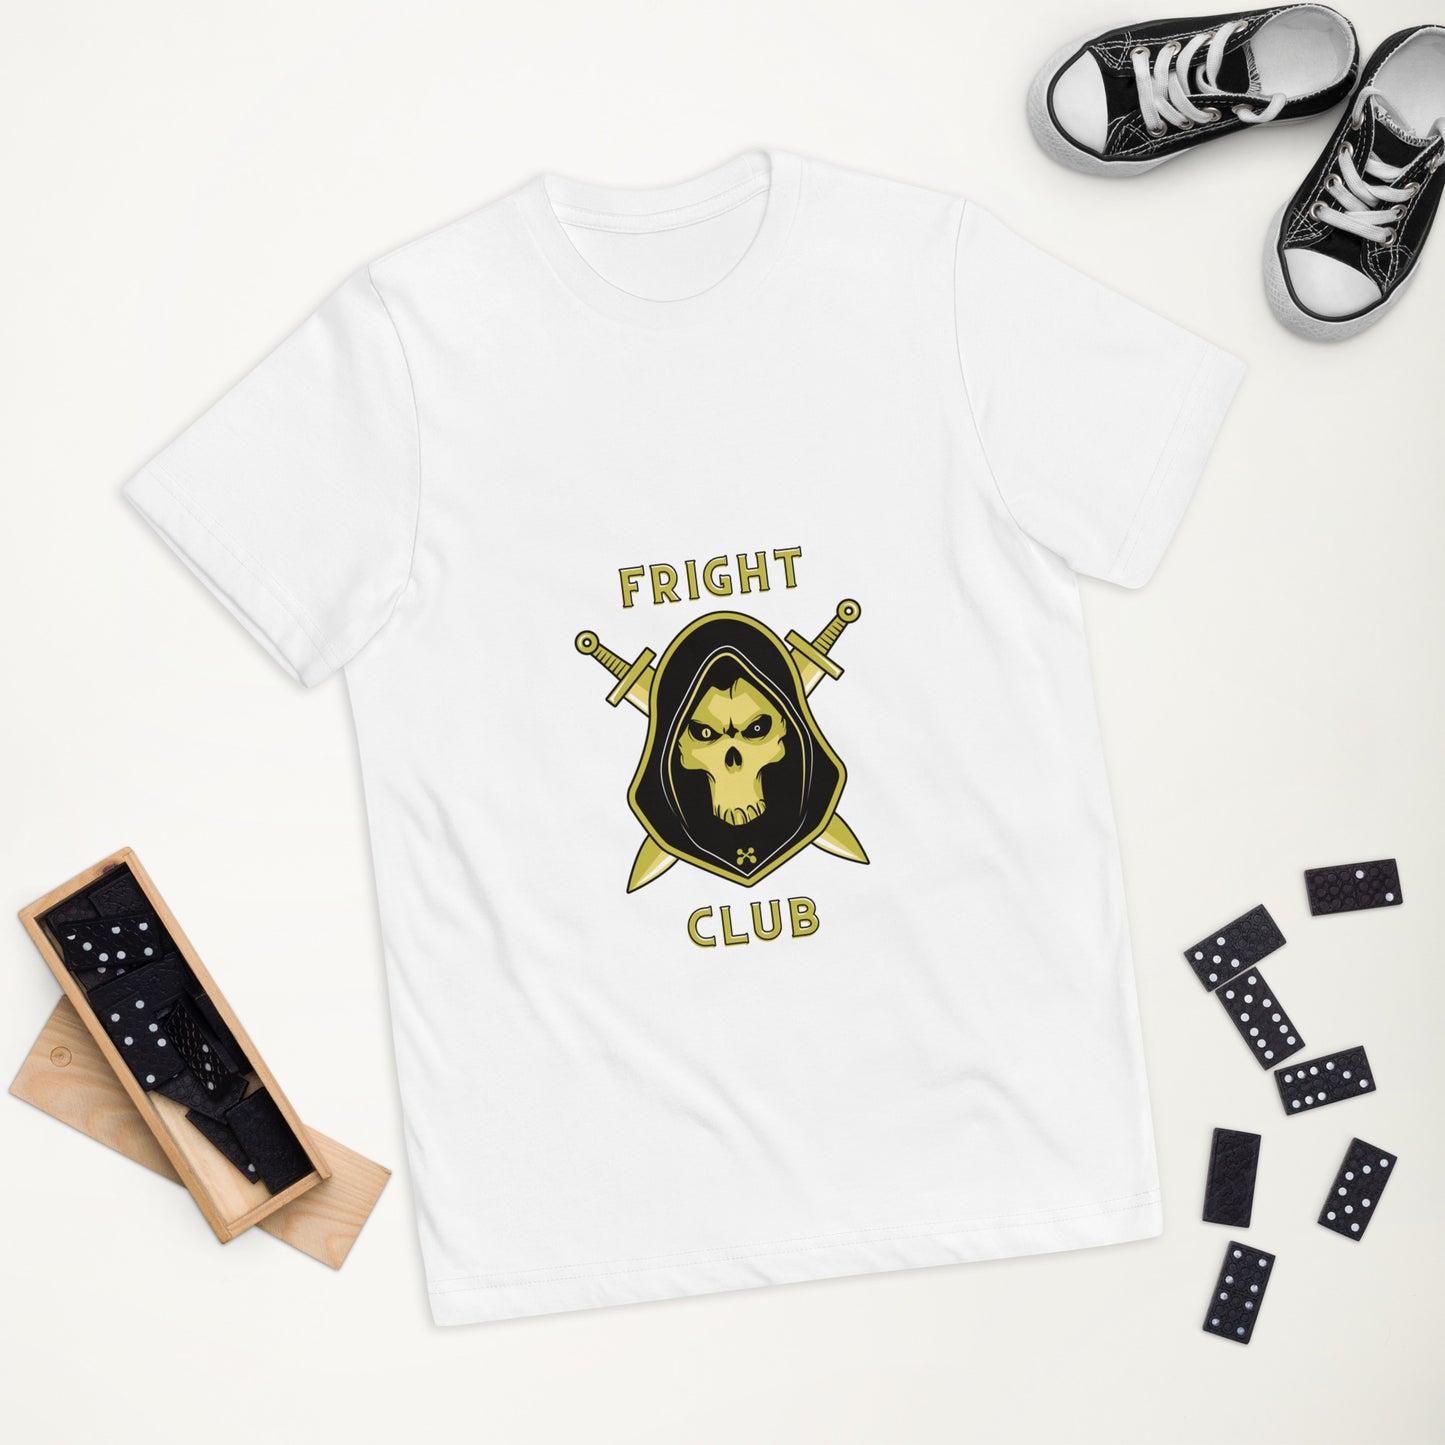 Fright Club Youth jersey t-shirt - A. Mandaline Art